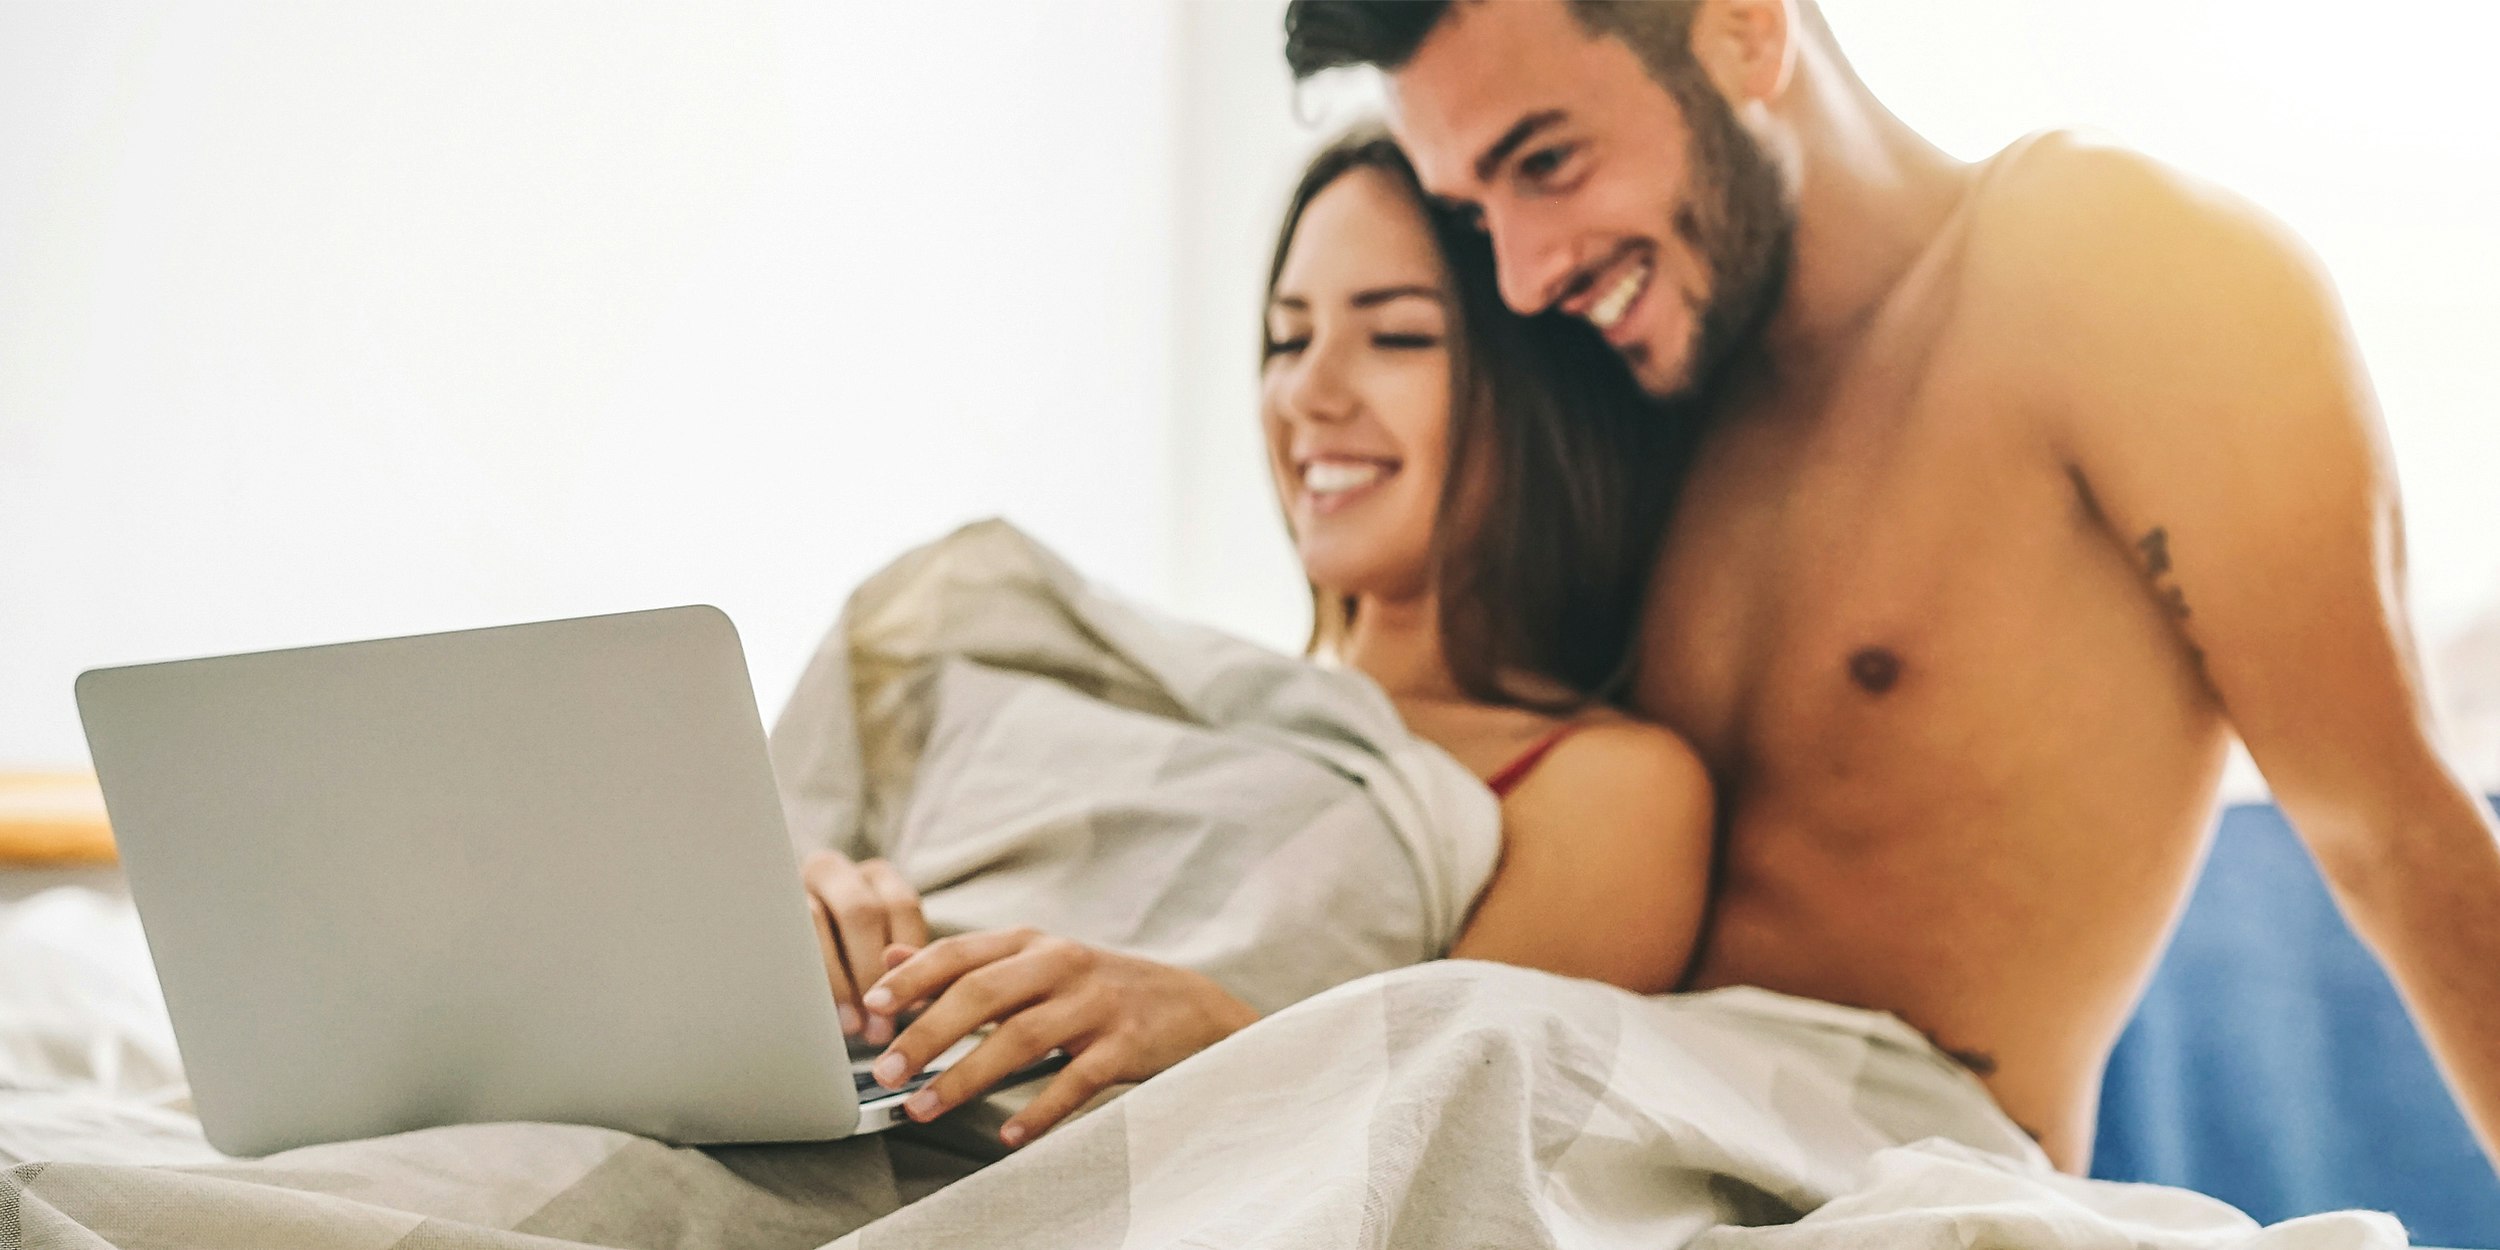 Erotic couple hardcore sex - Quality porn